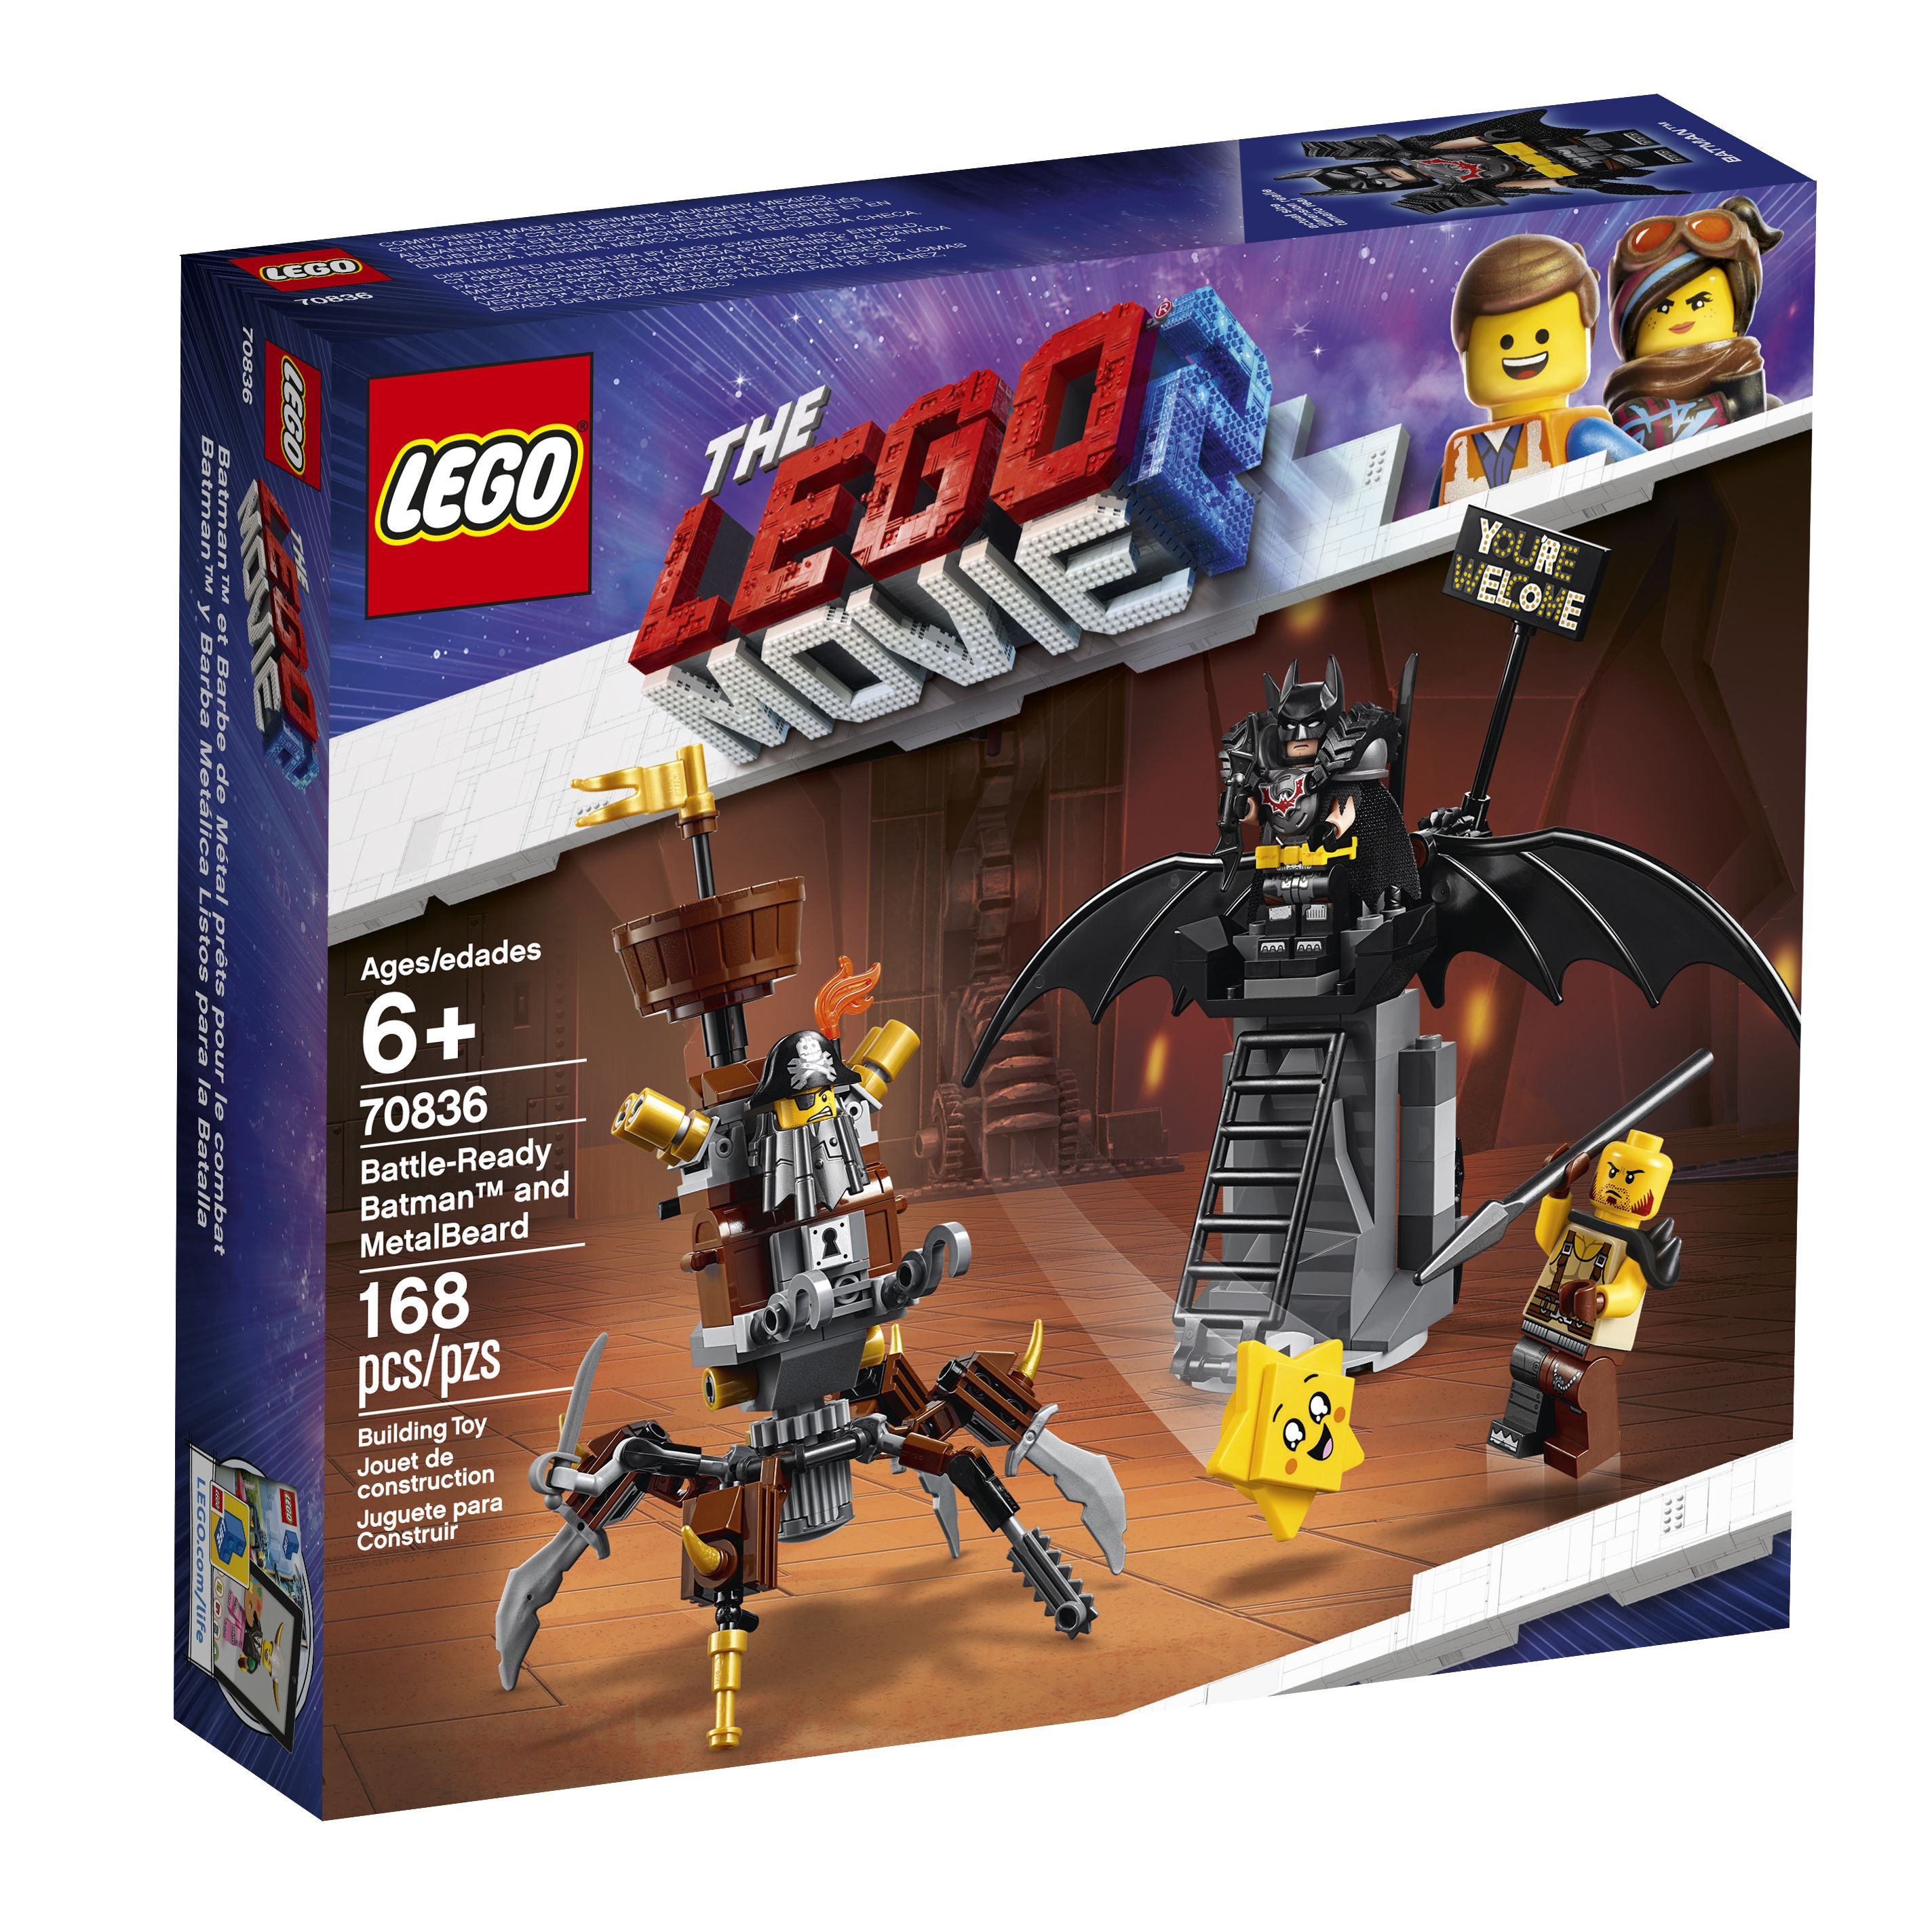 The Batman Universe - LEGO Batman Set Revealed for The ...